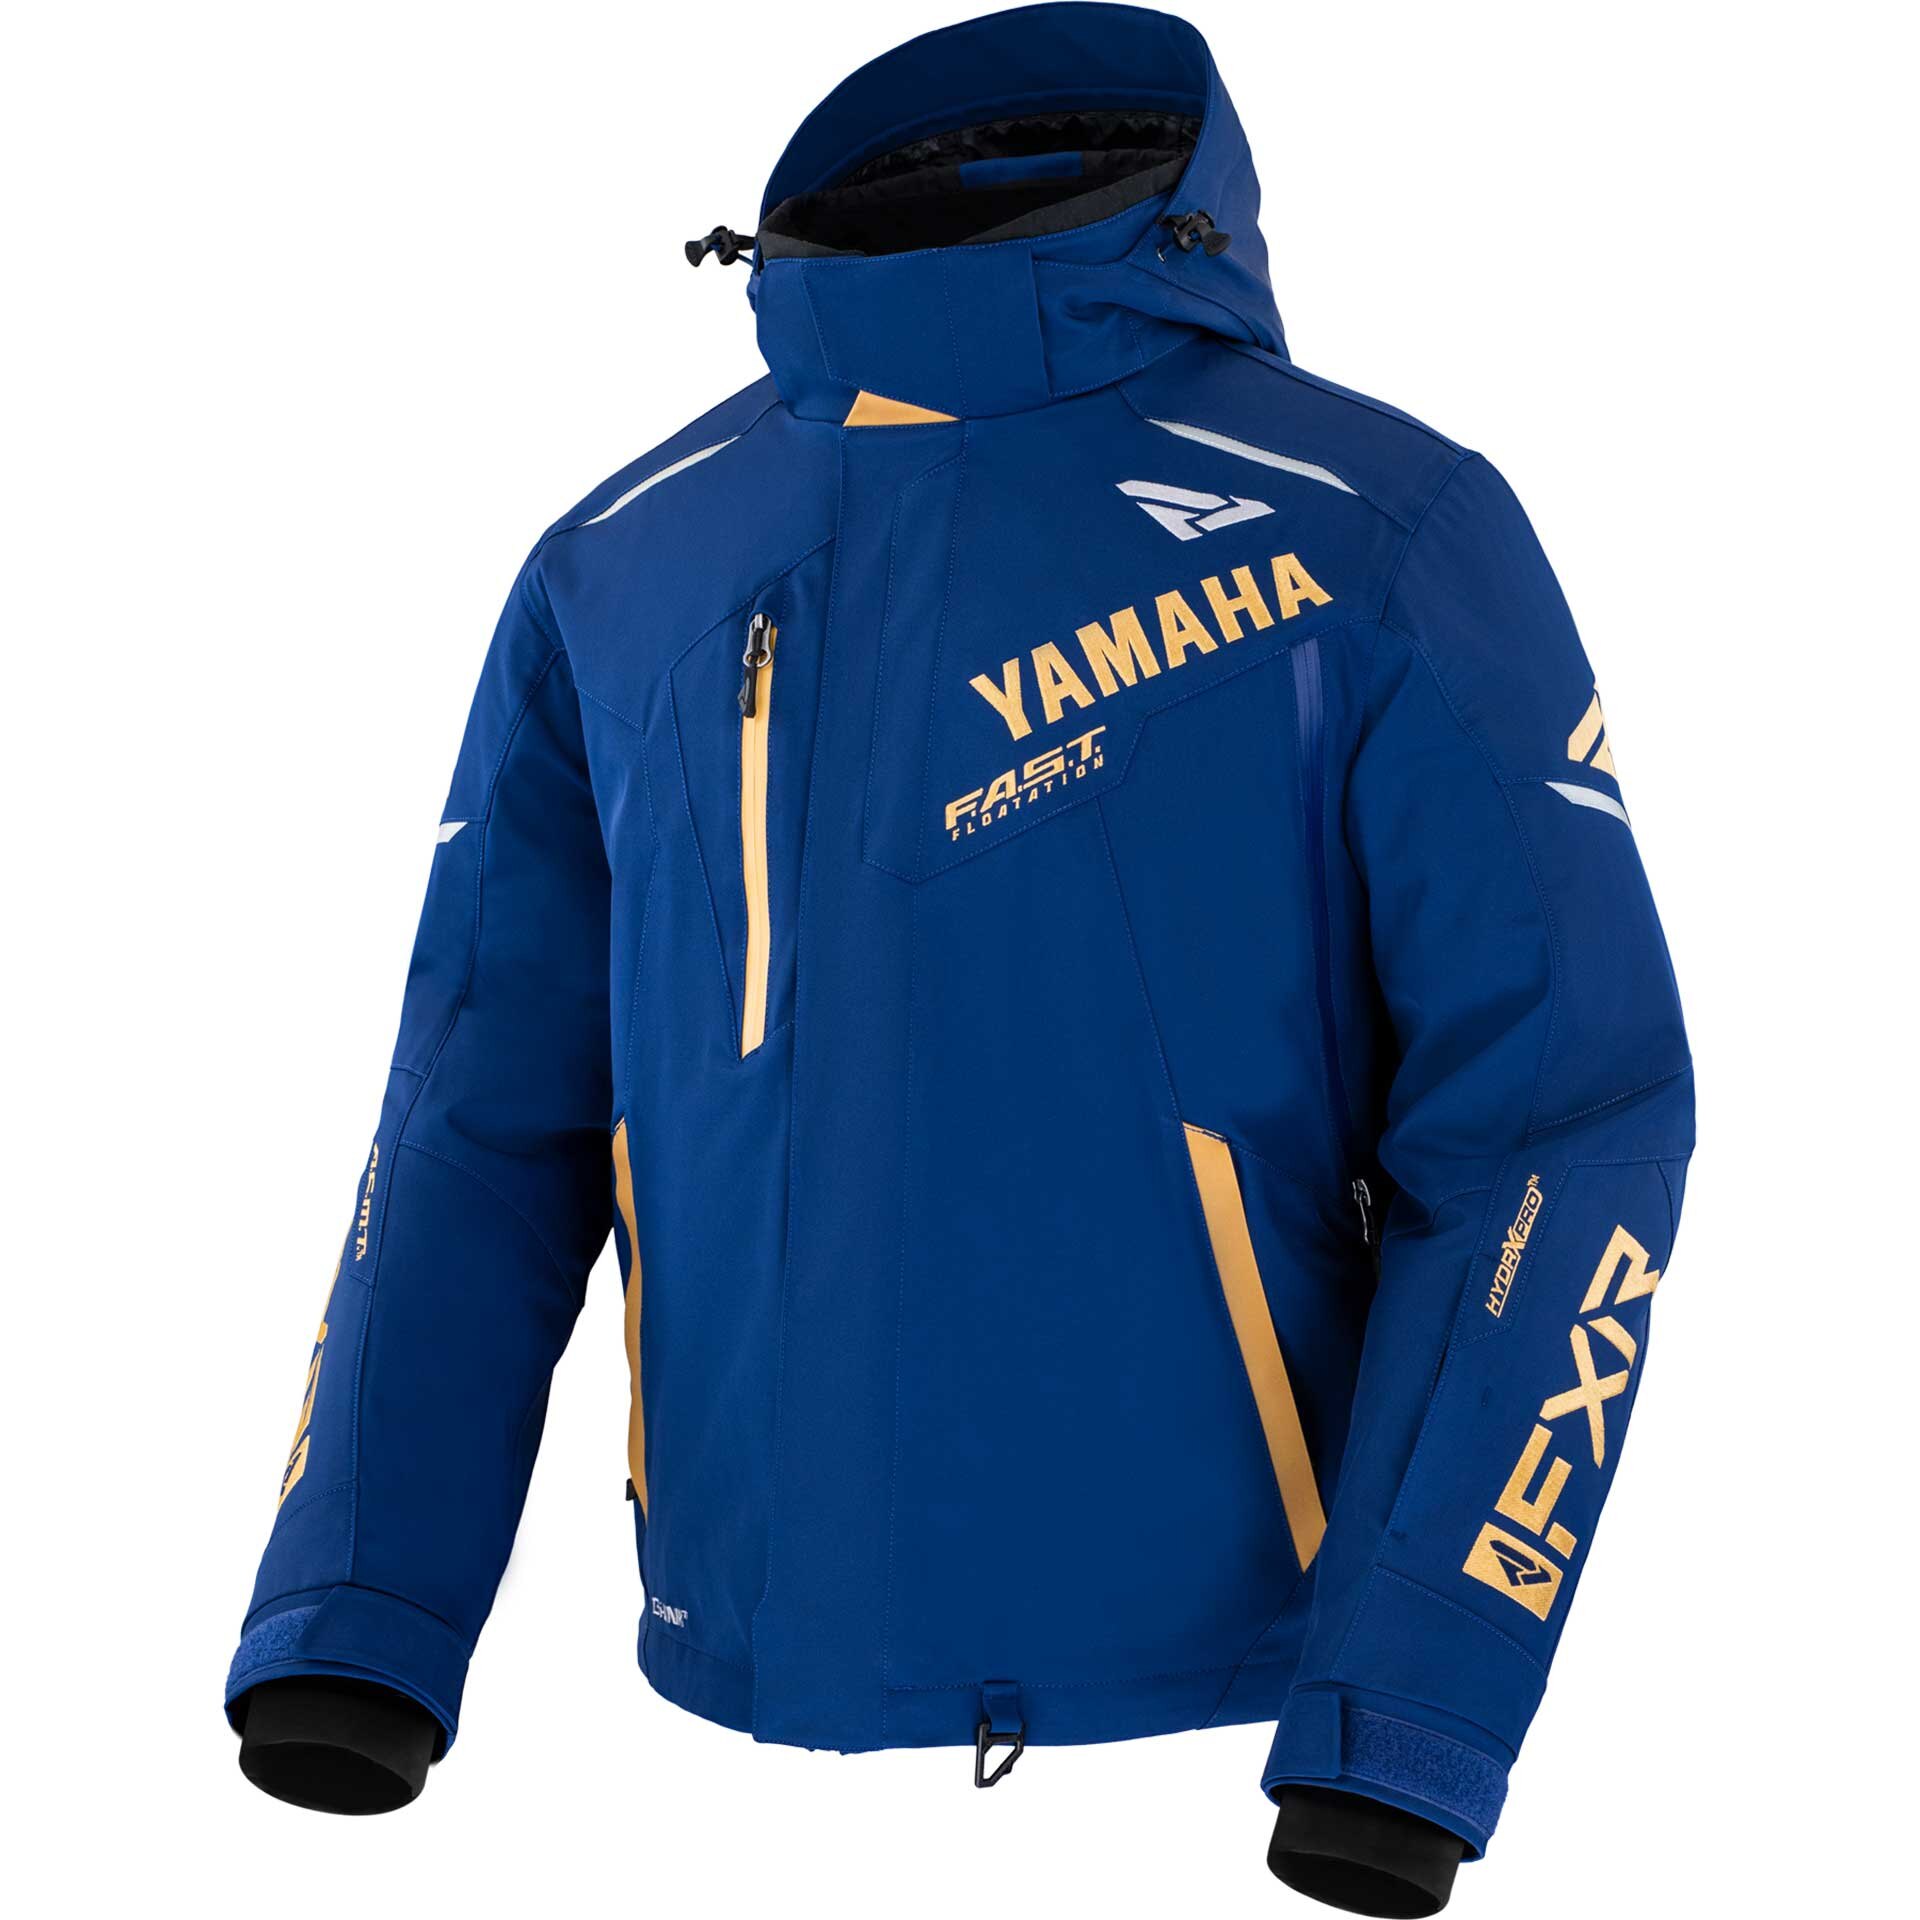 Yamaha Renegade FX Jacket by FXR®